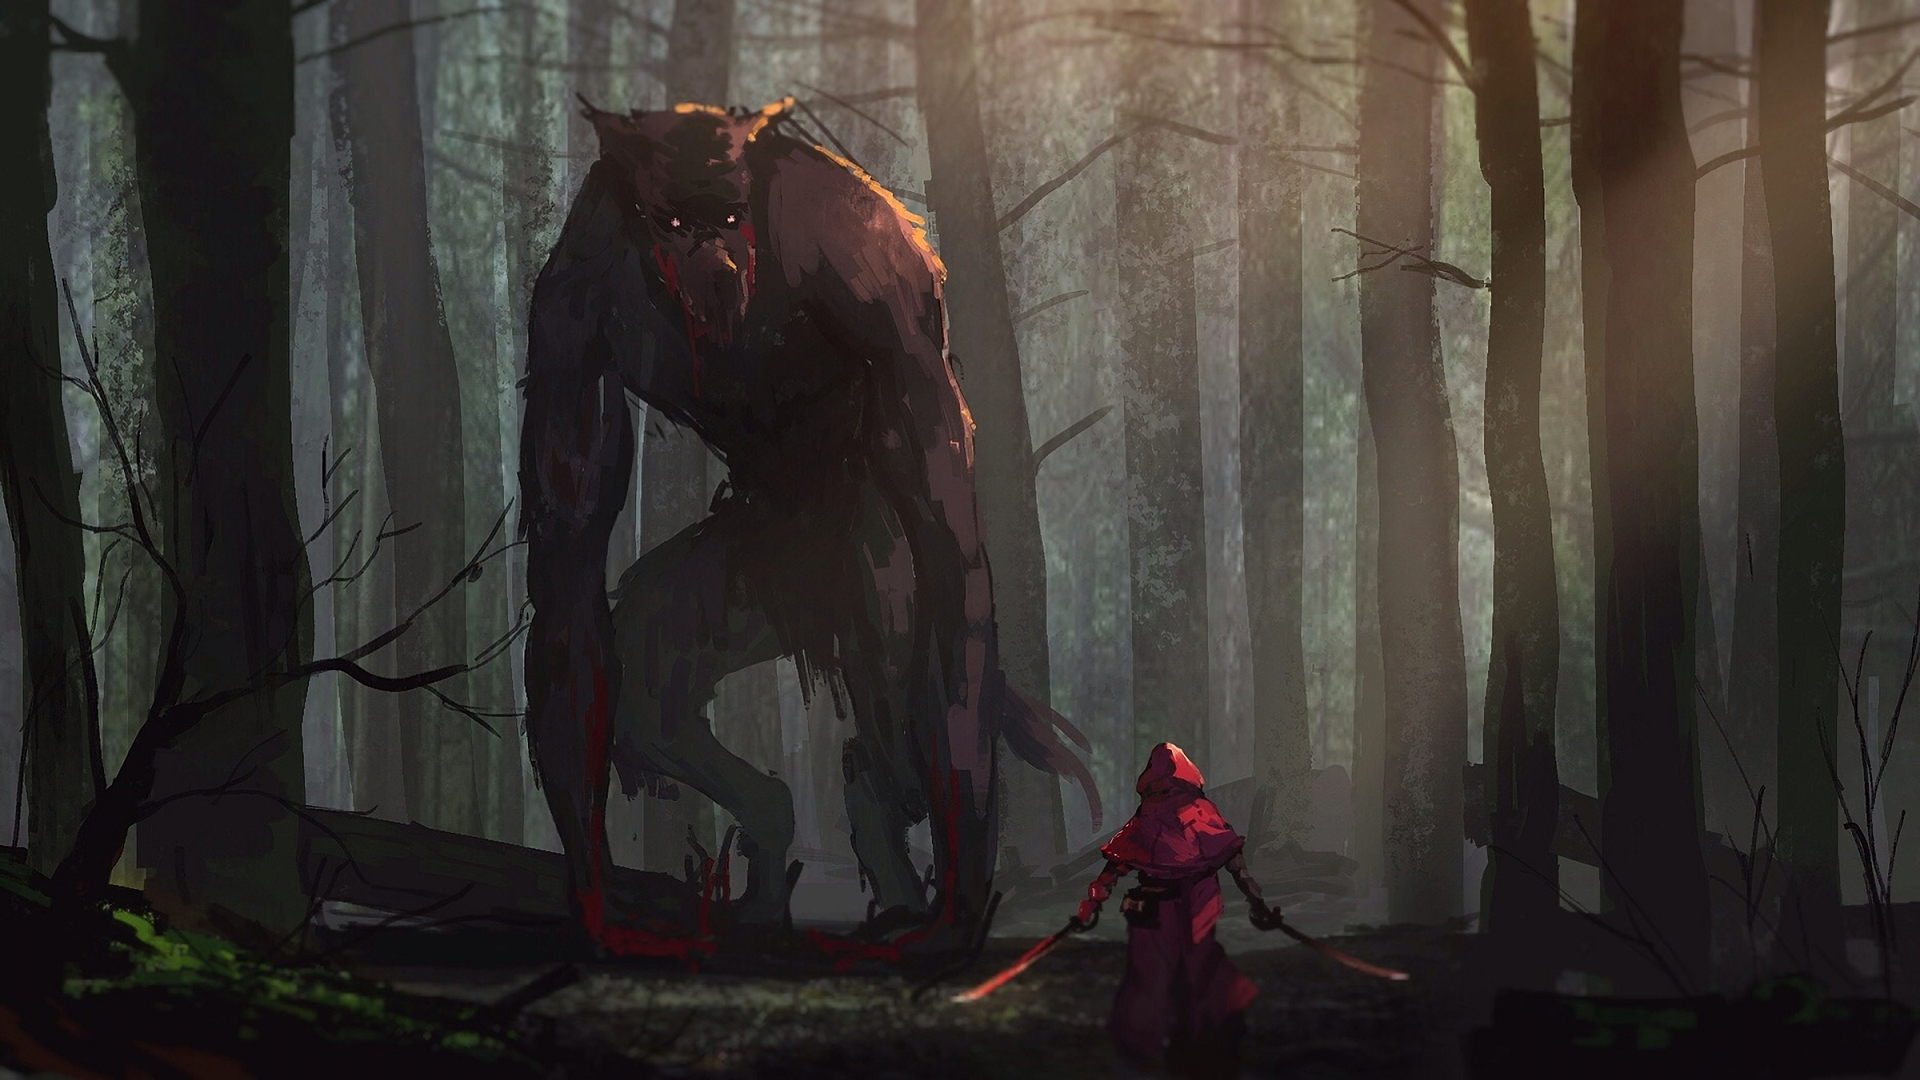 General 1920x1080 werewolves sword Little Red Riding Hood wood hoods trees weapon fairy tale